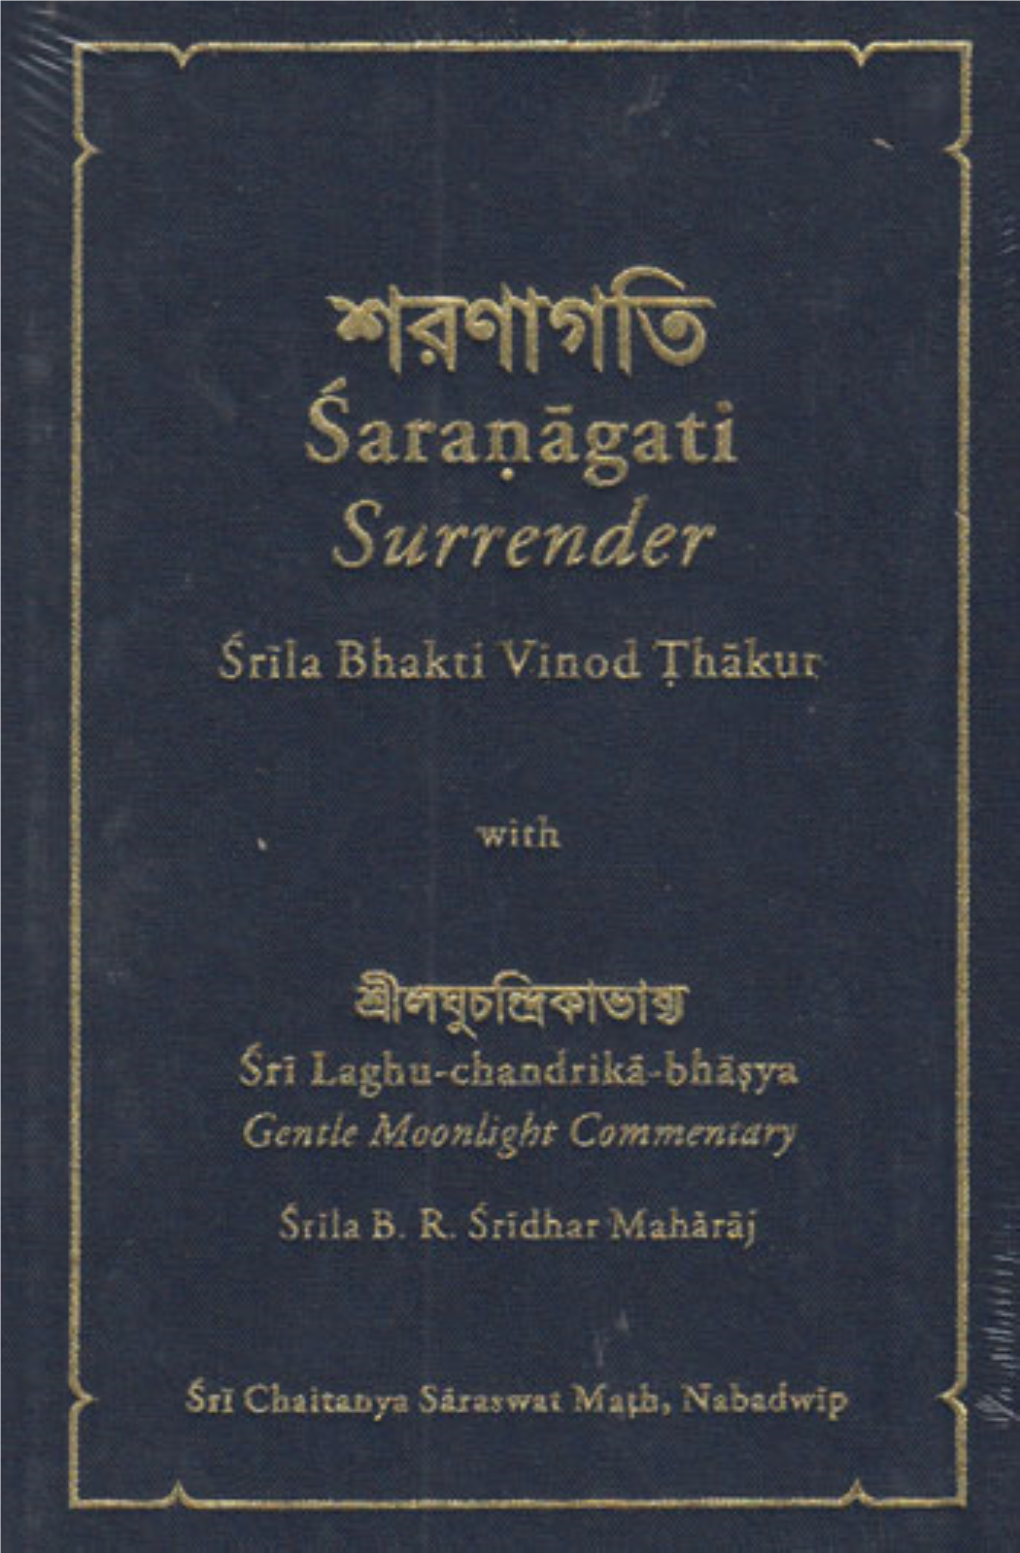 Stgejoy Śaraṇāgati Surrender